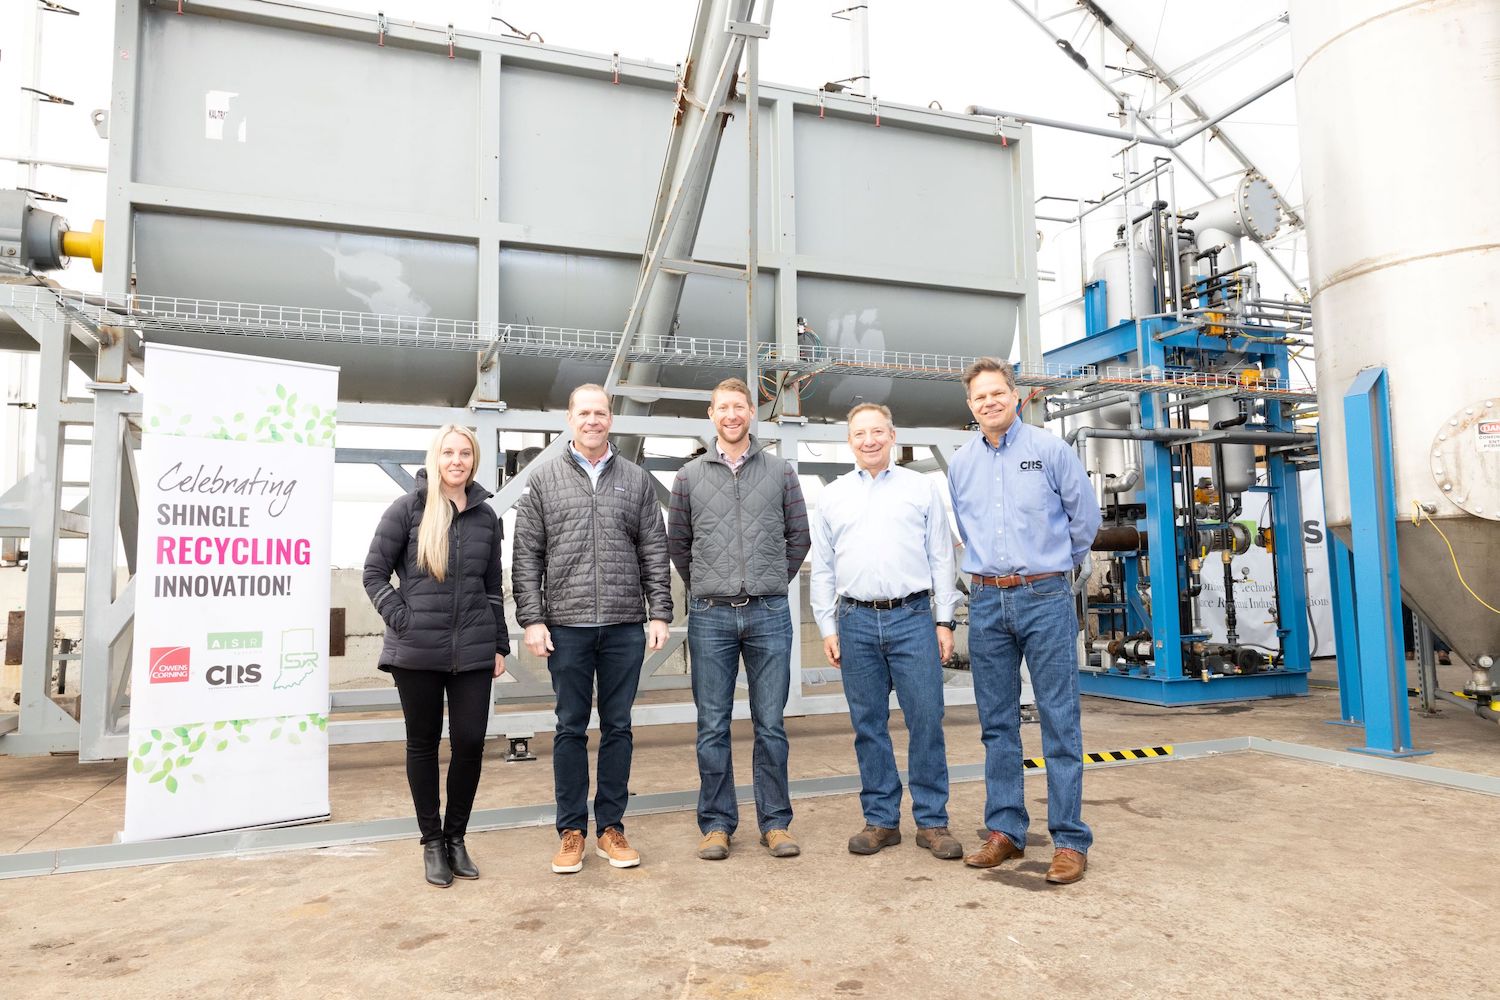 owens corning team at ribbon-cutting of shingle recycling pilot plant